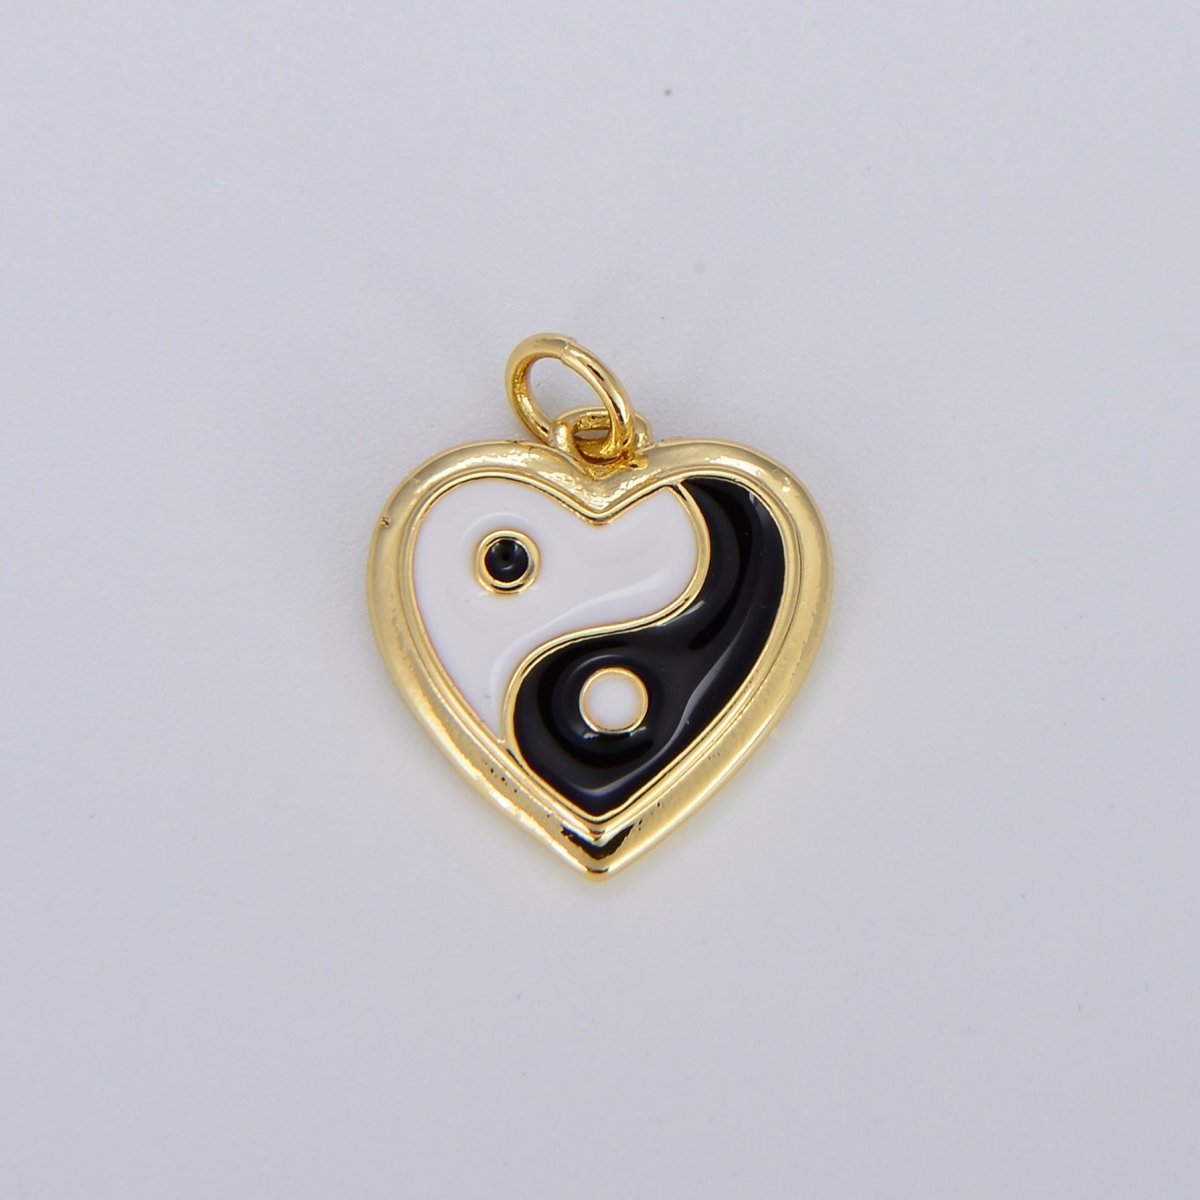 Enamel Heart 14K Gold Filled Heart Charm Yin & Yang Charms for Bracelet Necklace Earring Colorful Y2K E-295 - E-304 - DLUXCA